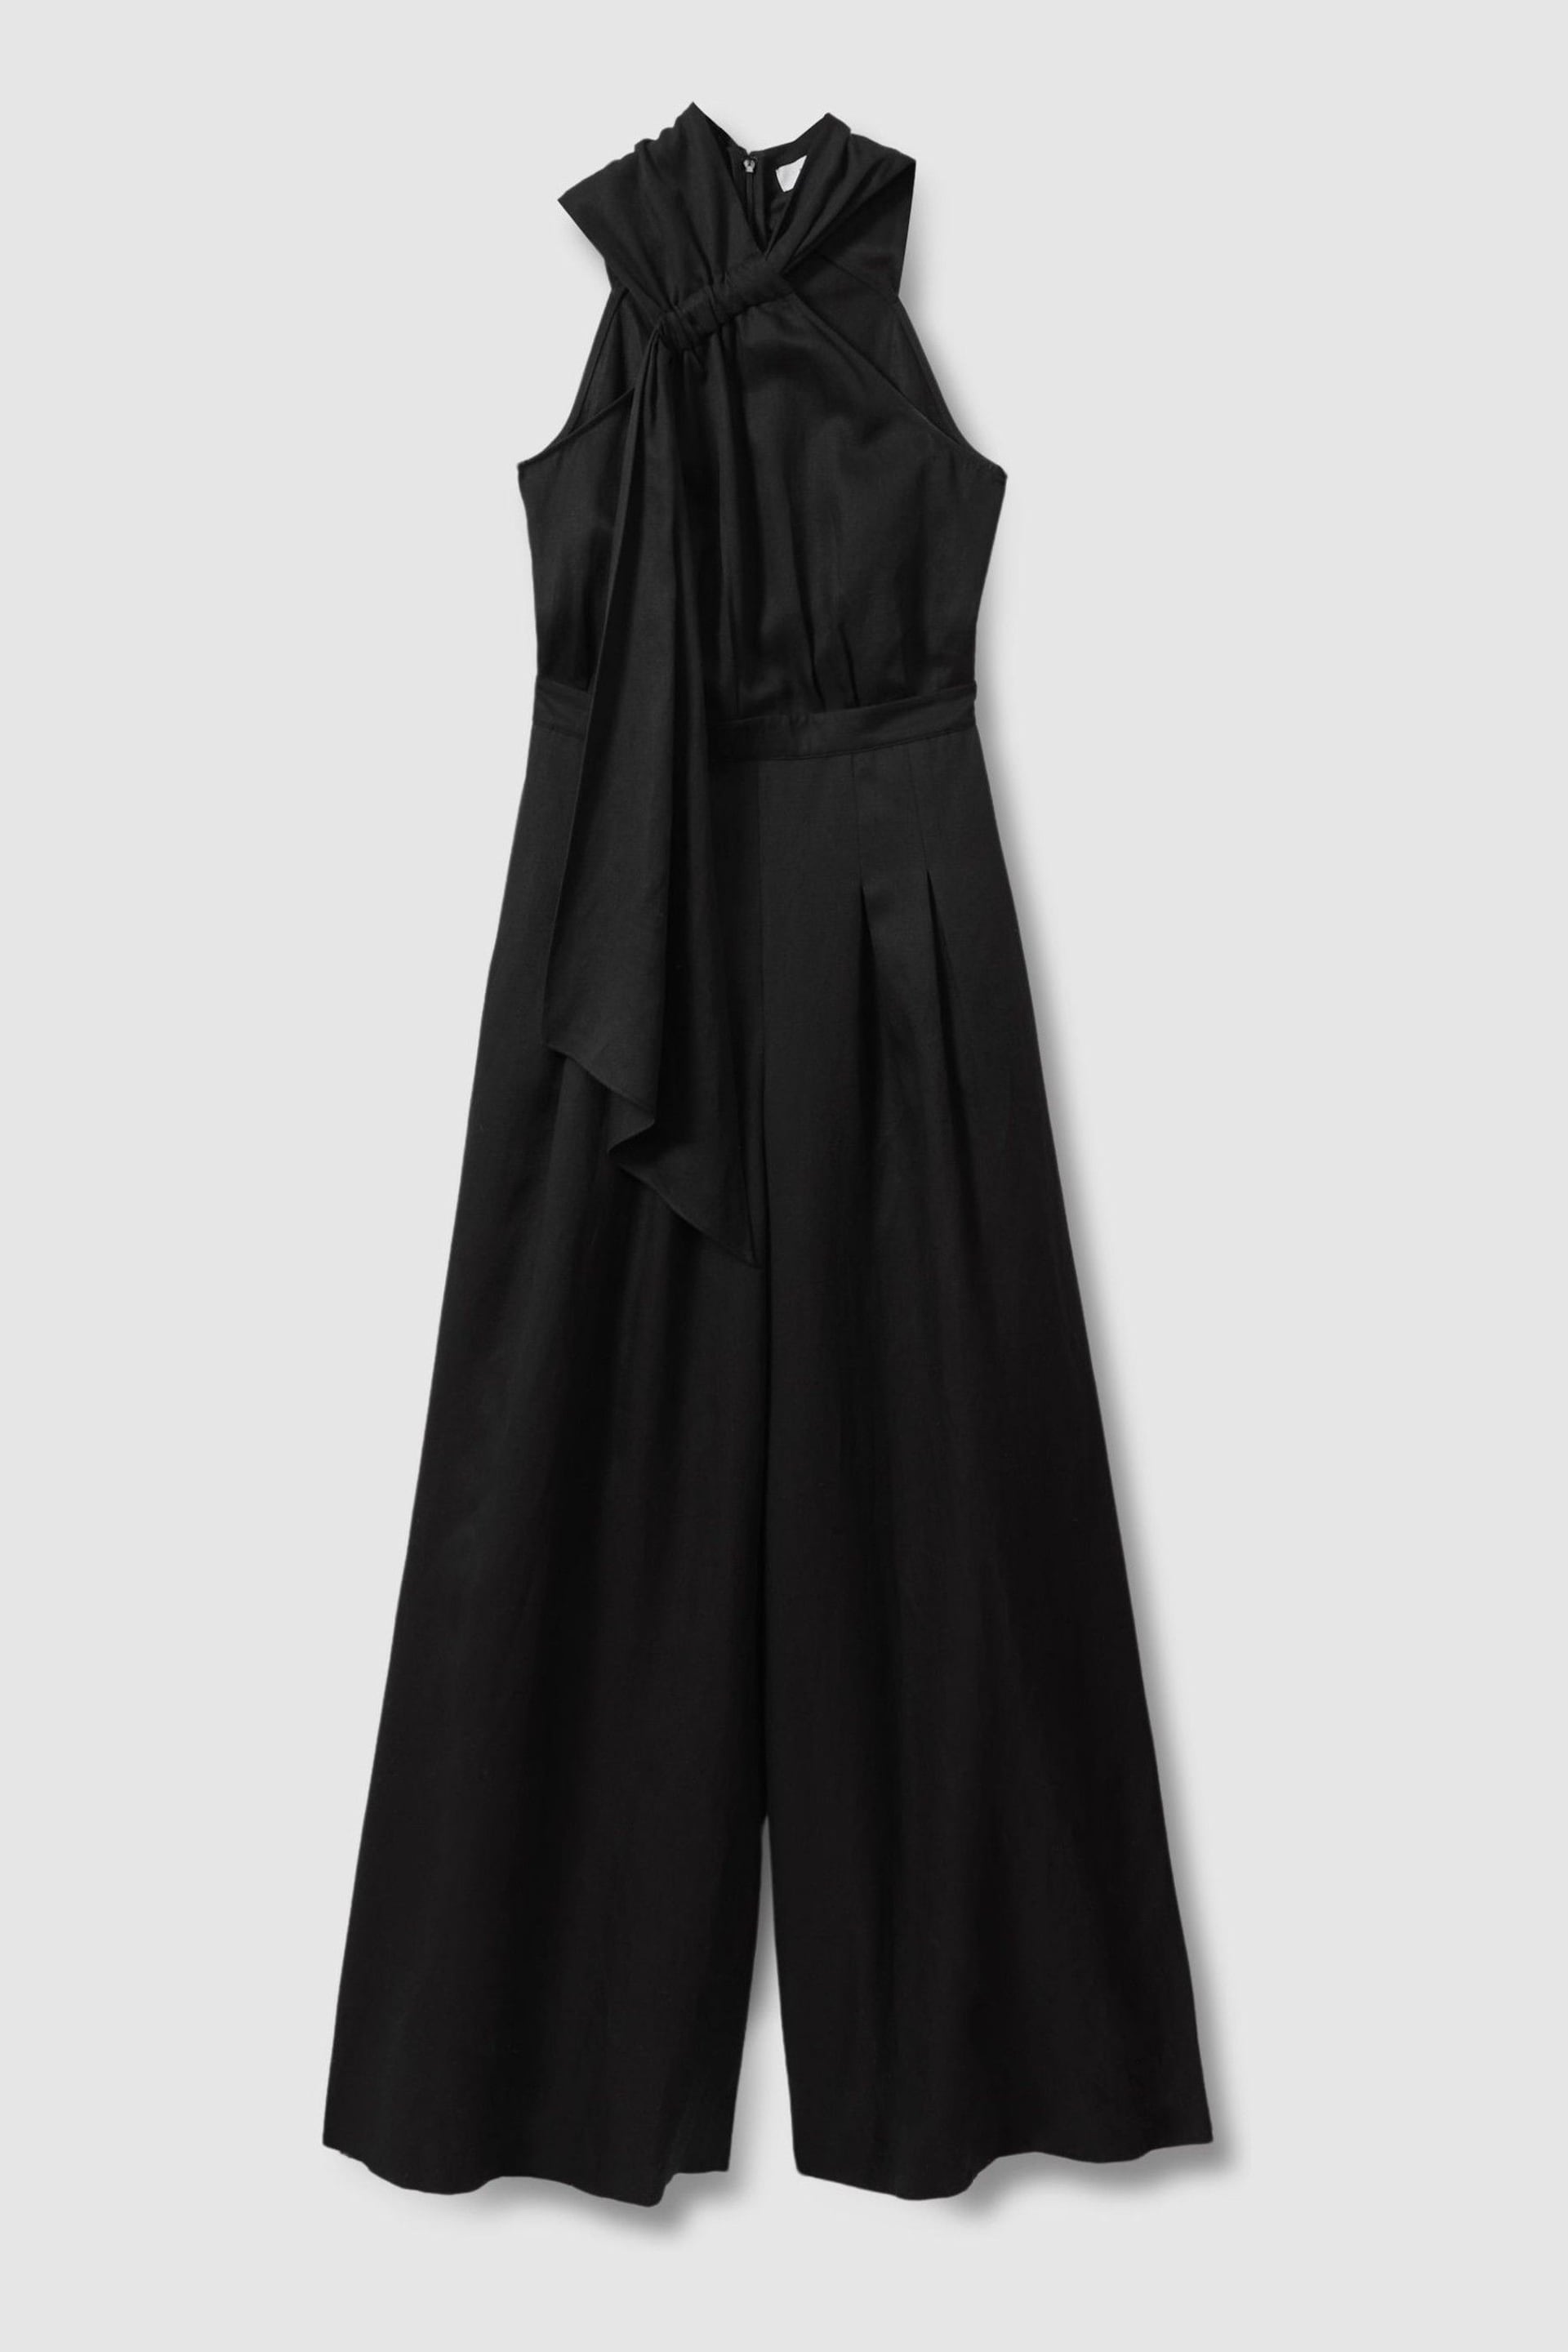 Reiss Black Selena Linen Blend Drape Jumpsuit - Image 2 of 6